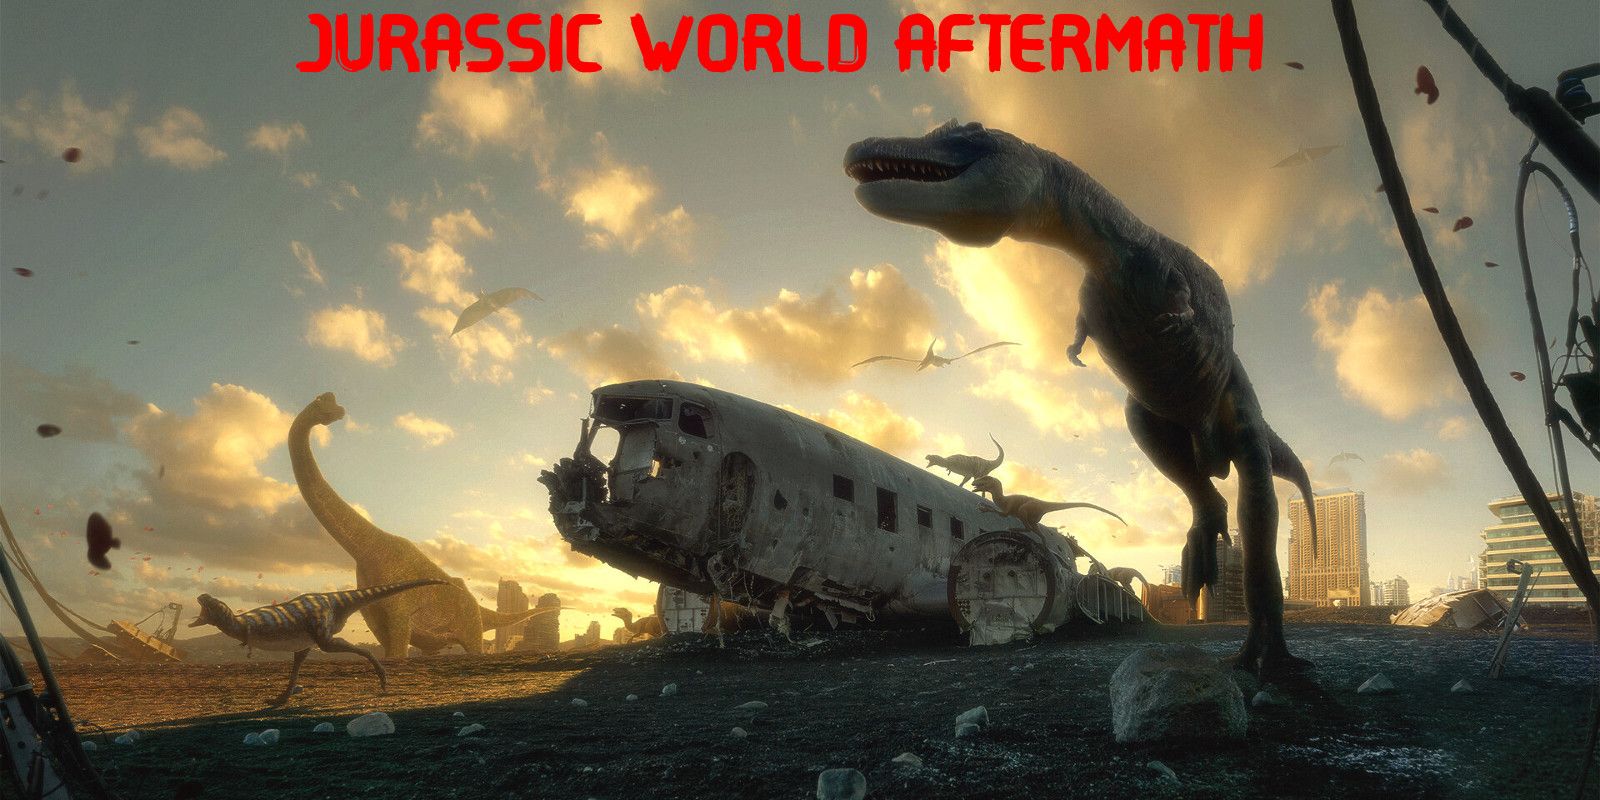 jurassic world aftermath psvr download